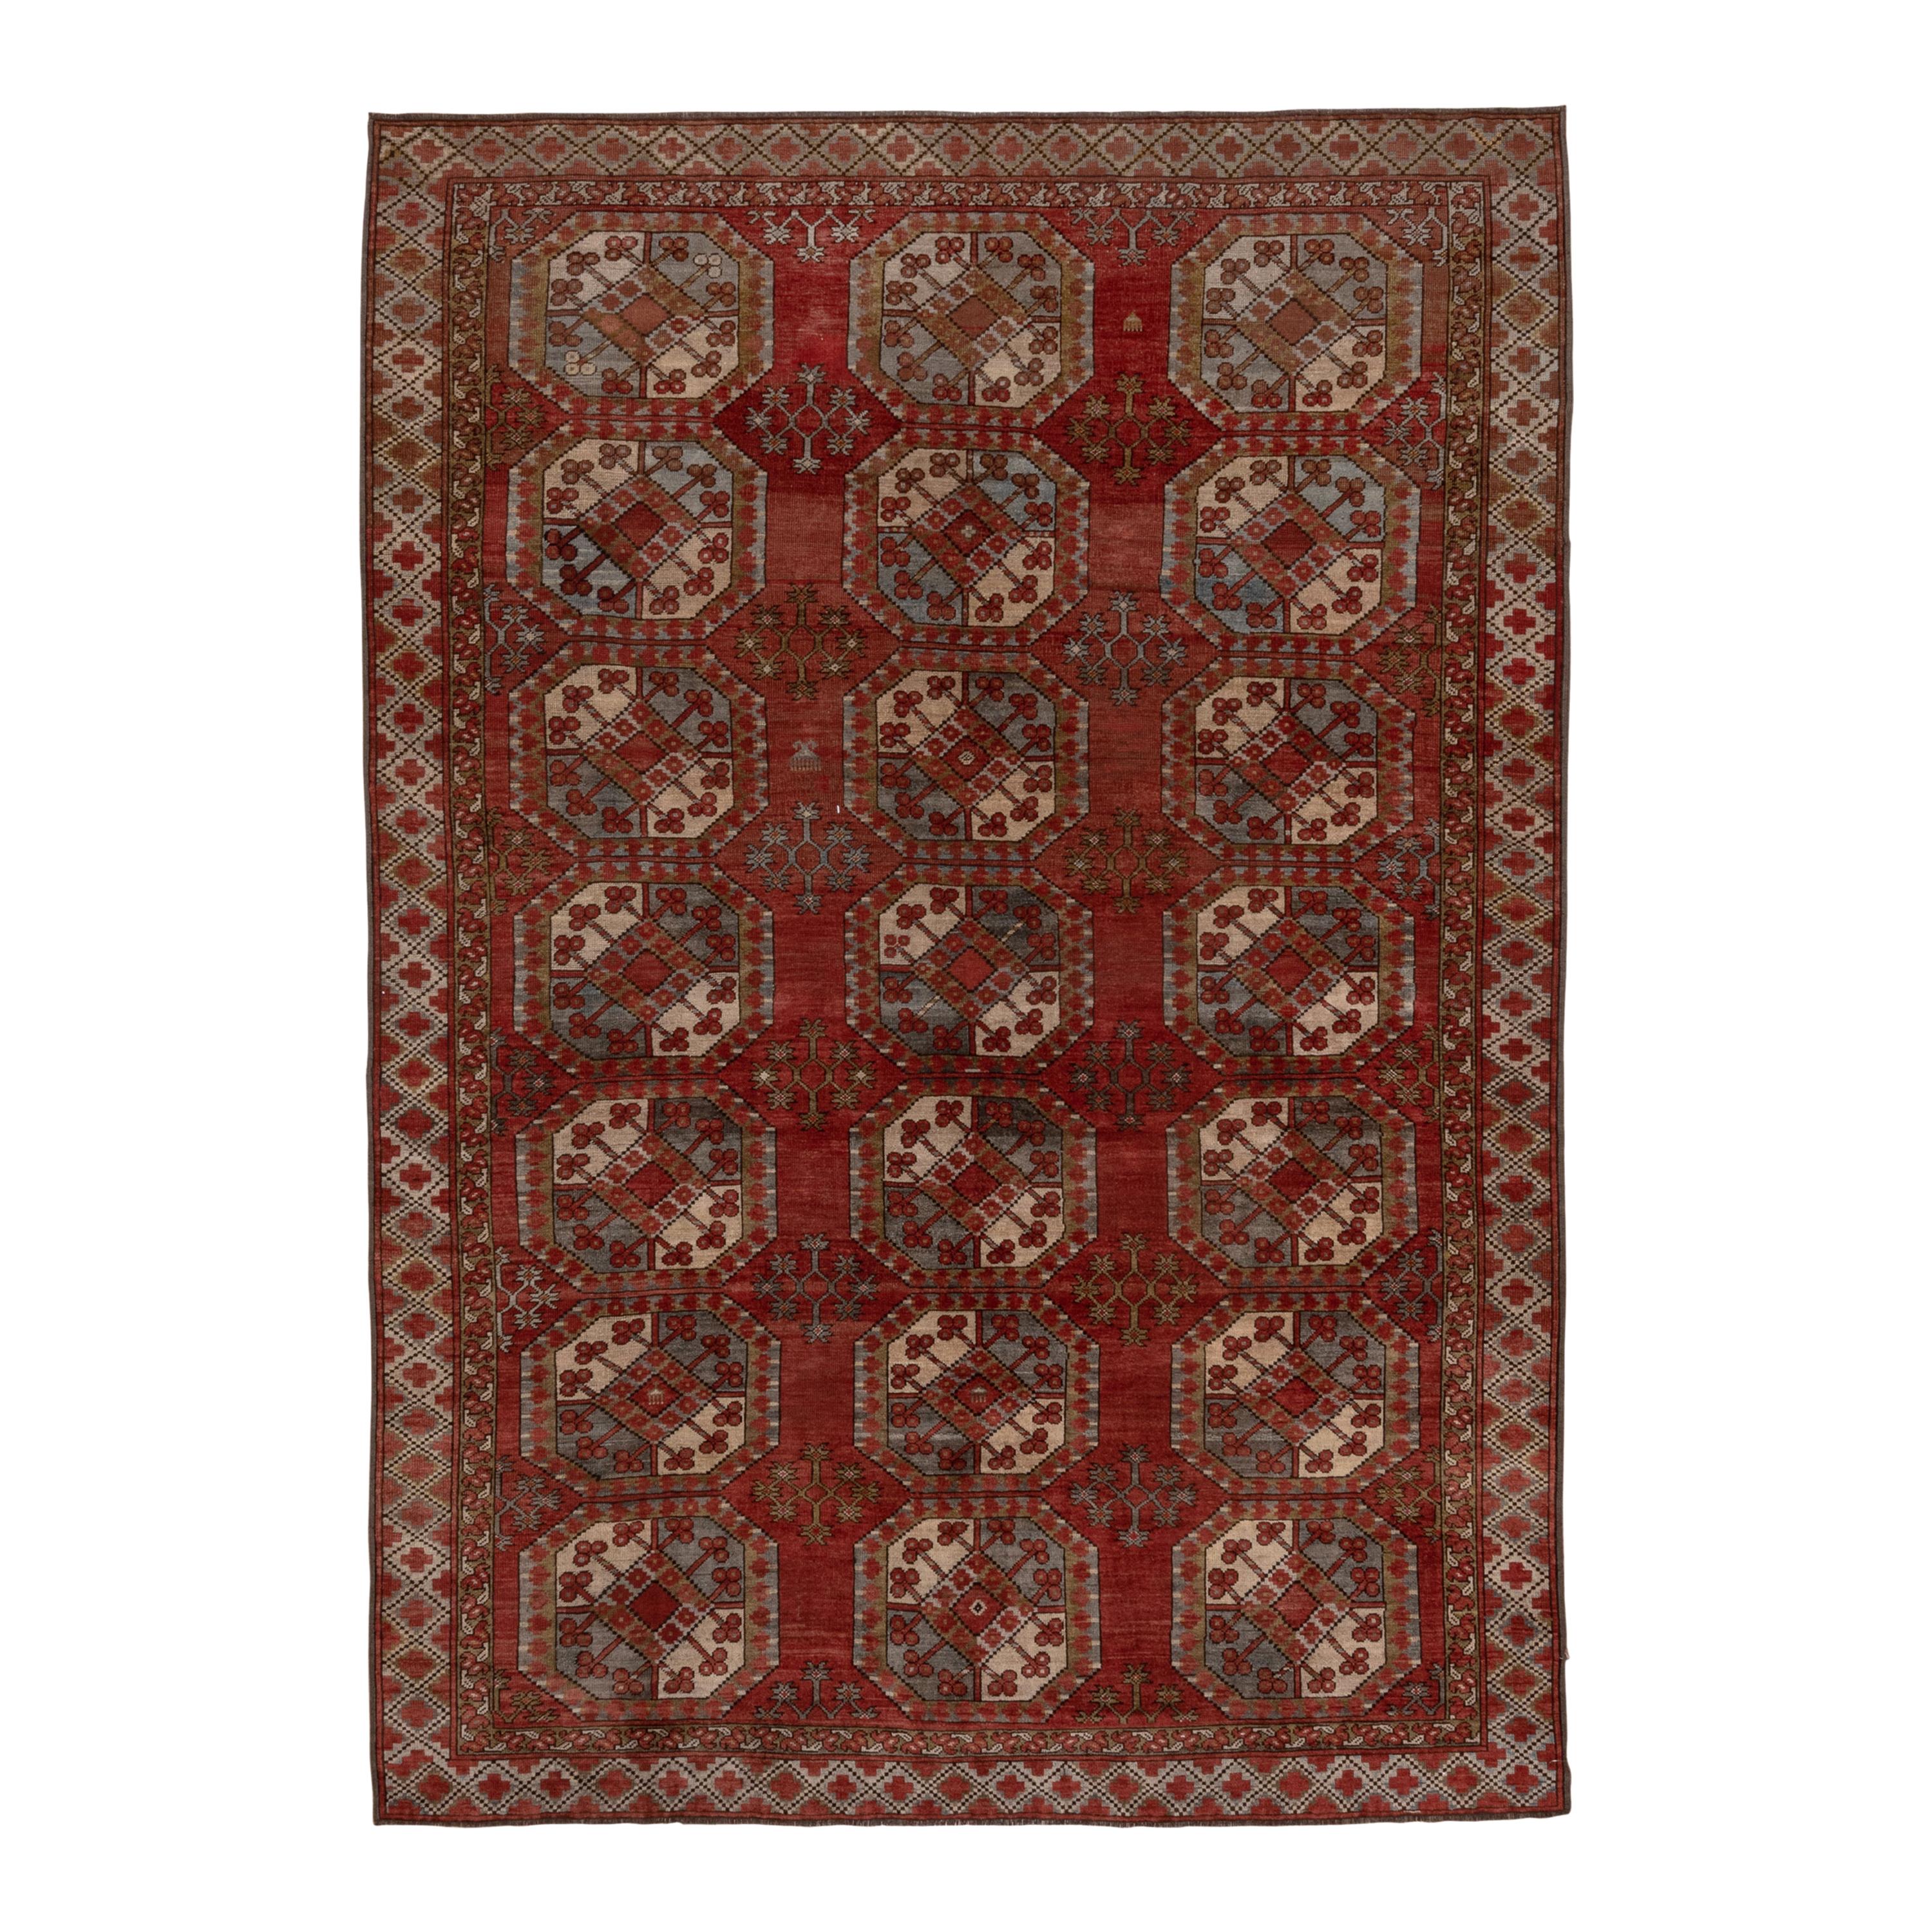 Antique Afghan Ersari Carpet, Red Field, Allover Field